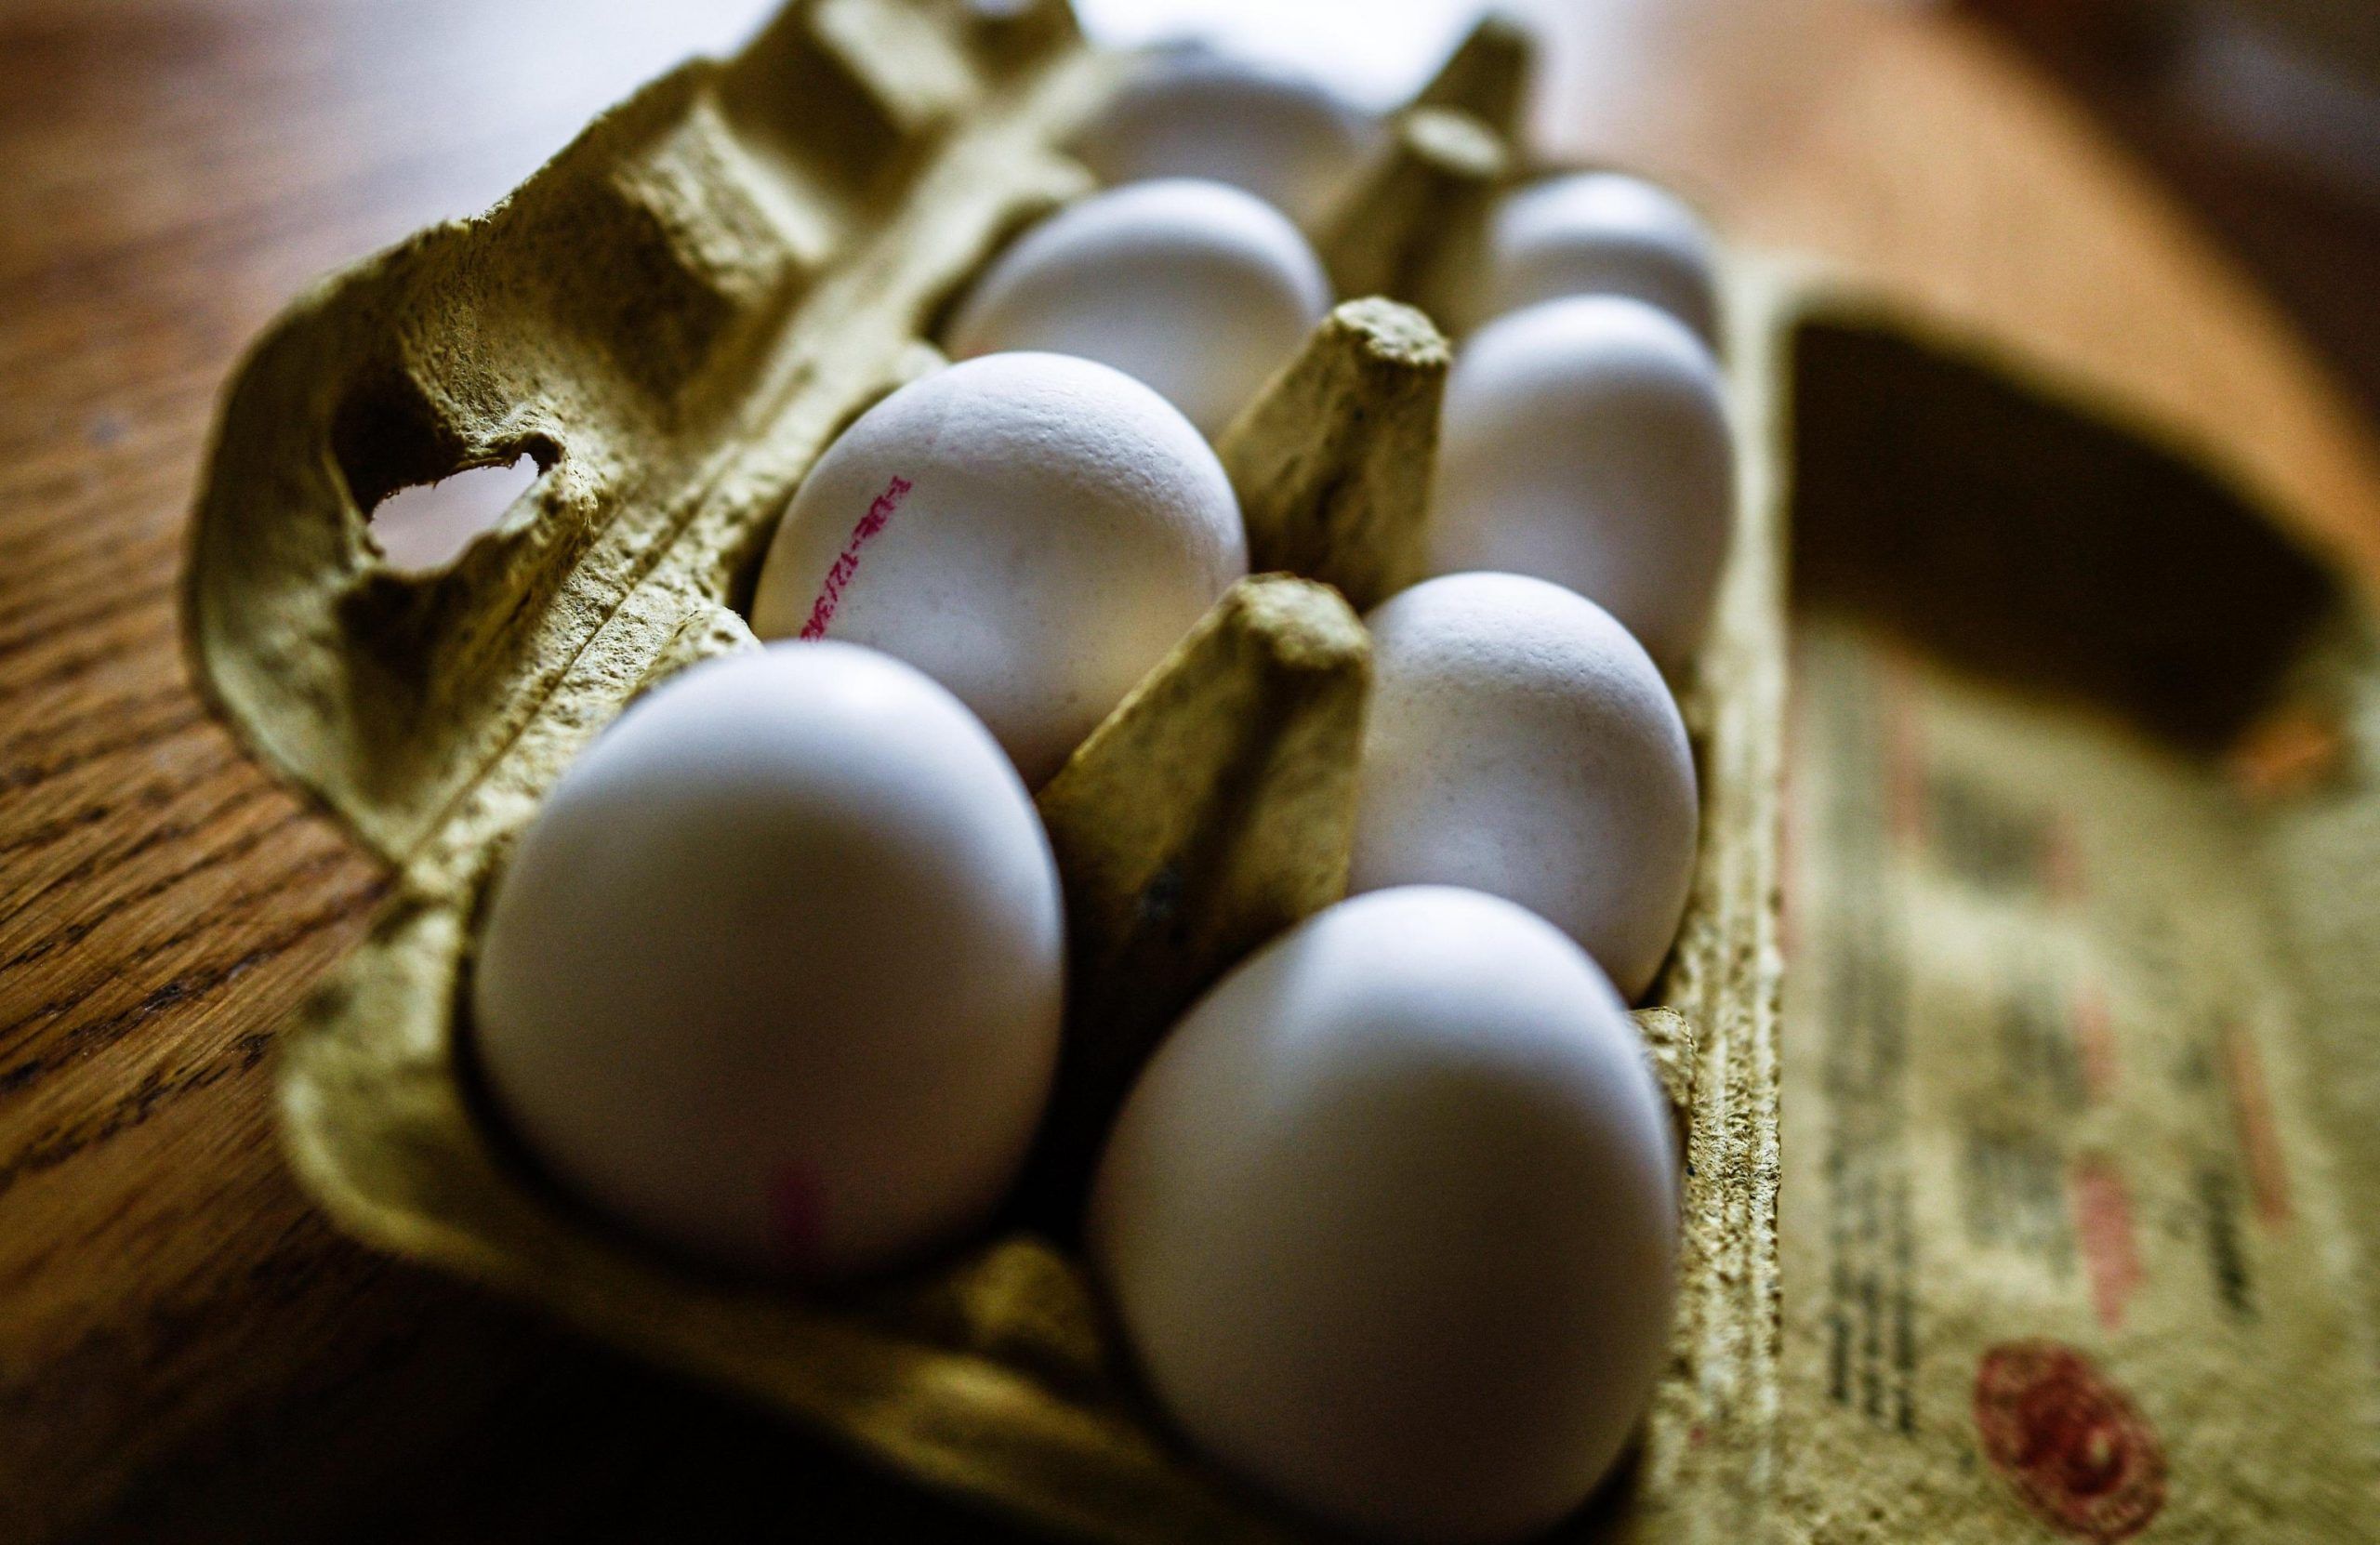 Fipronil uova sintomi cura rimedi rischi